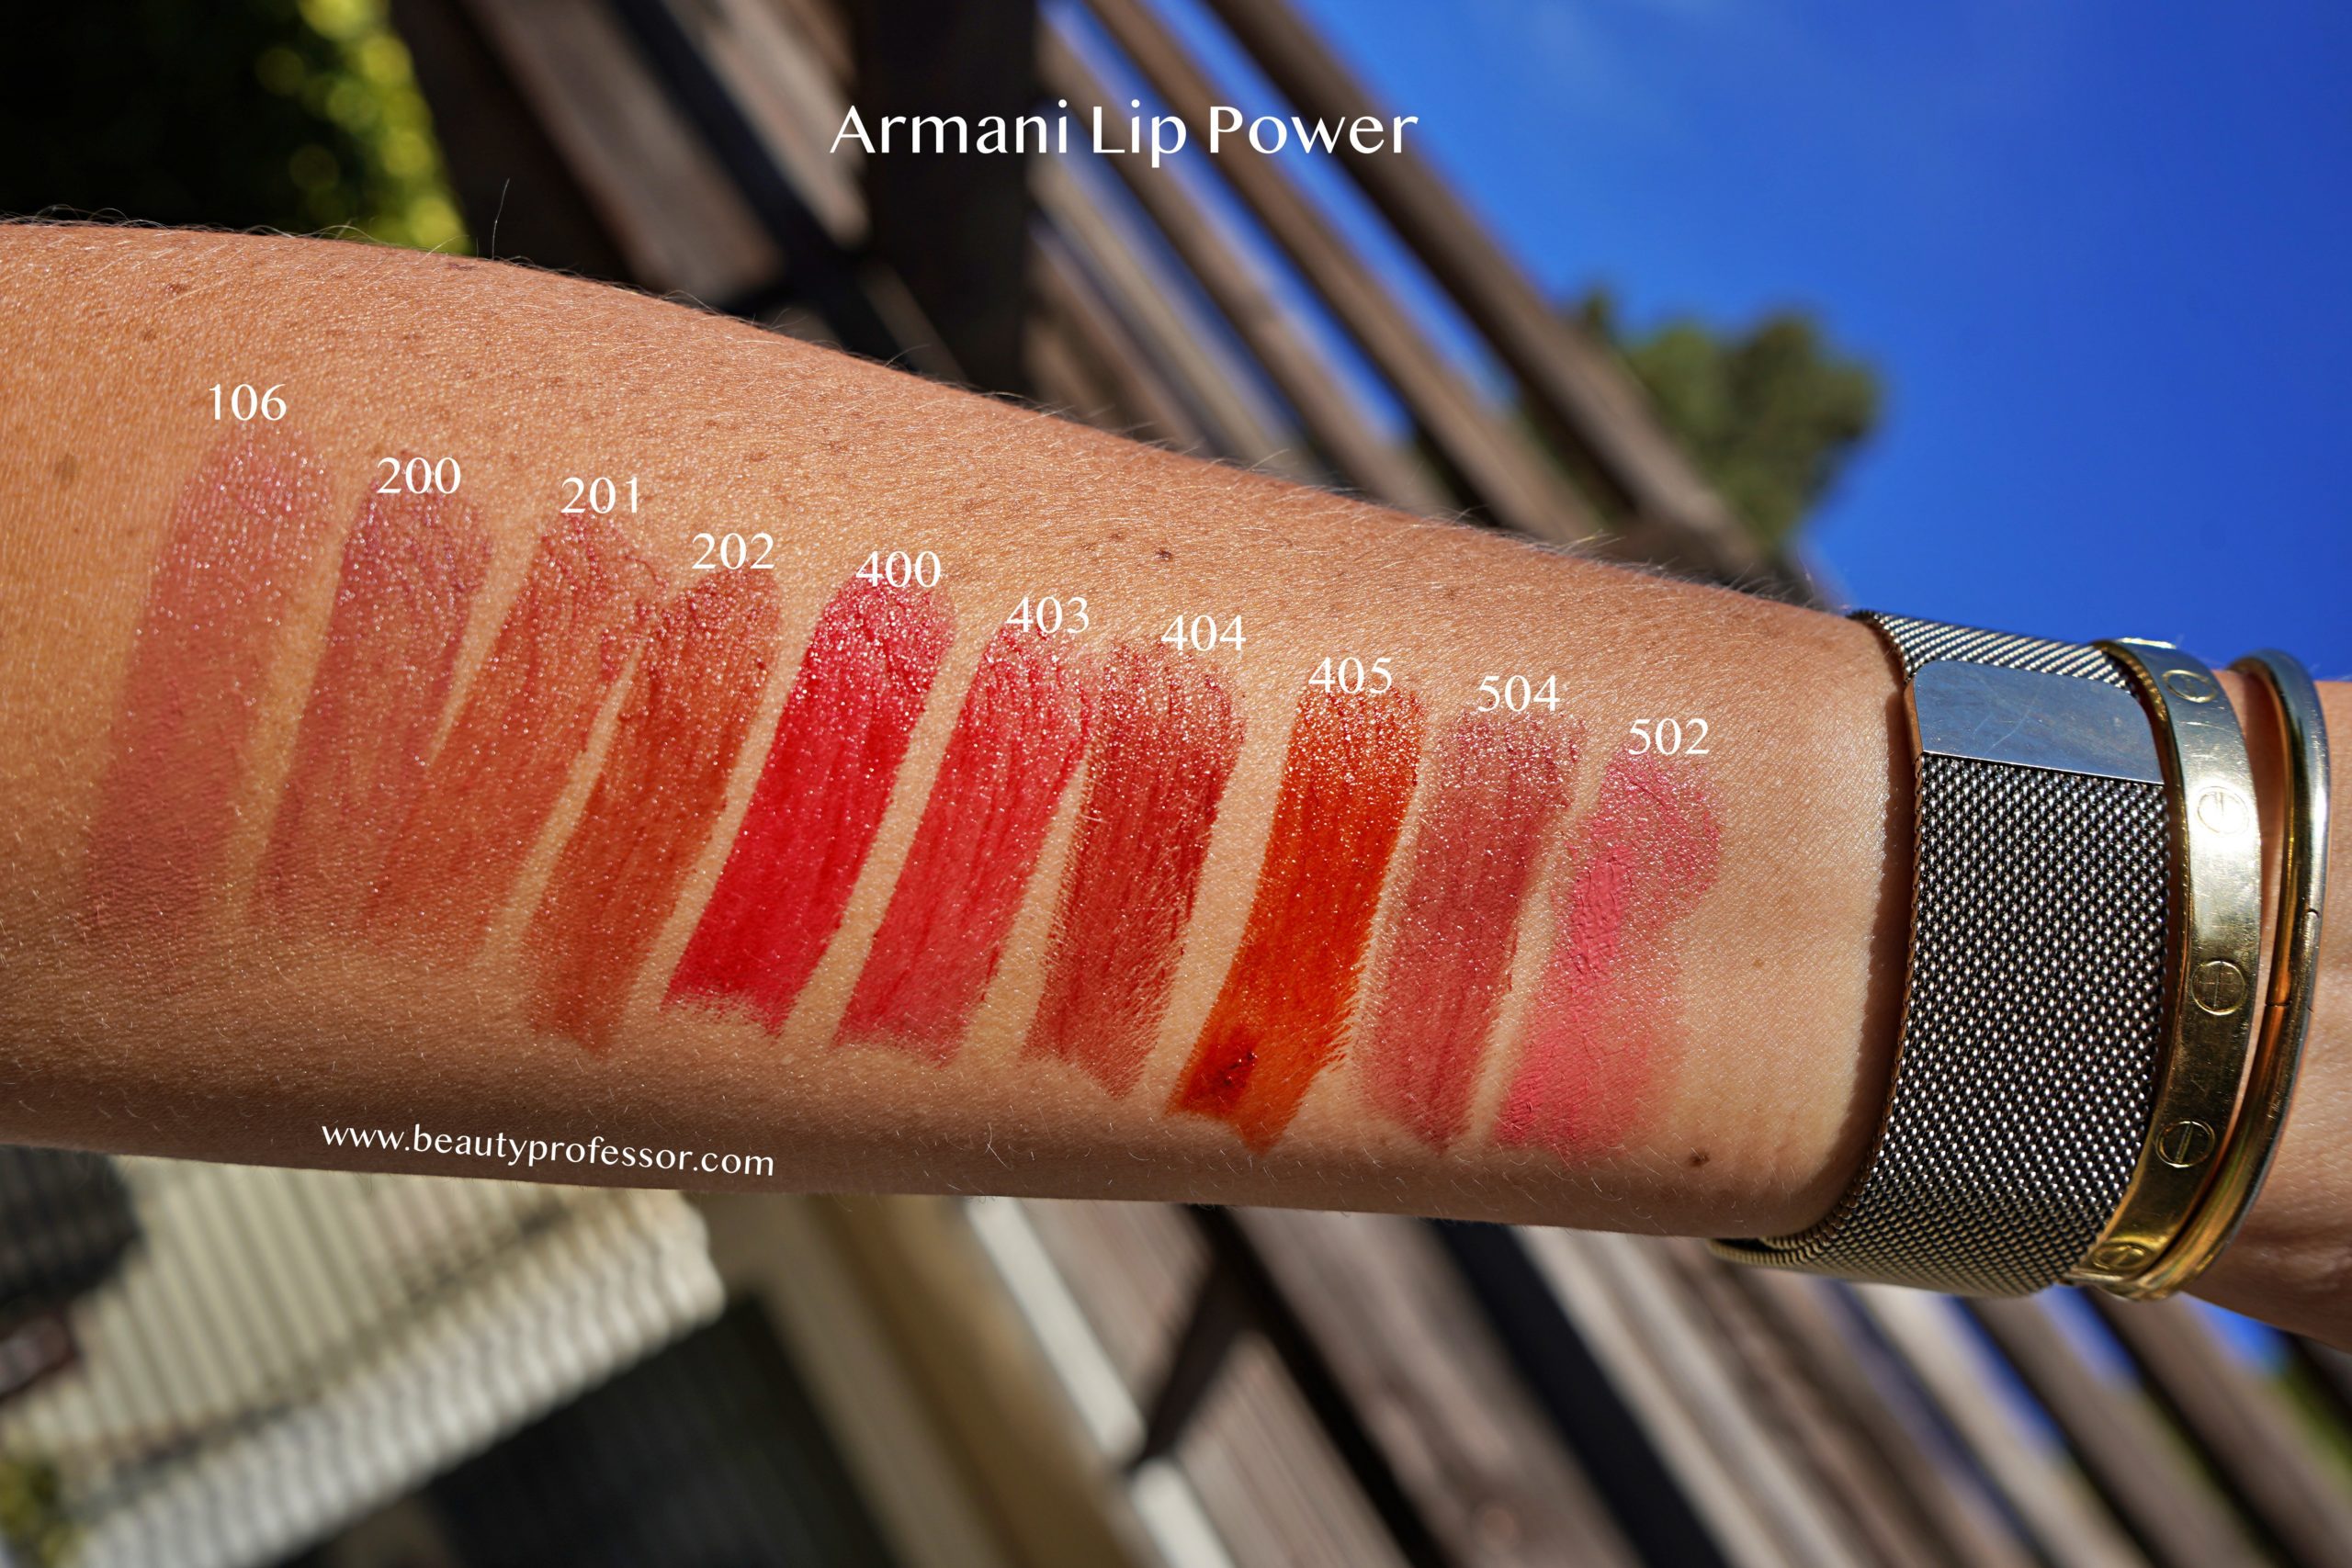 Giorgio Armani lip power swatches on an arm